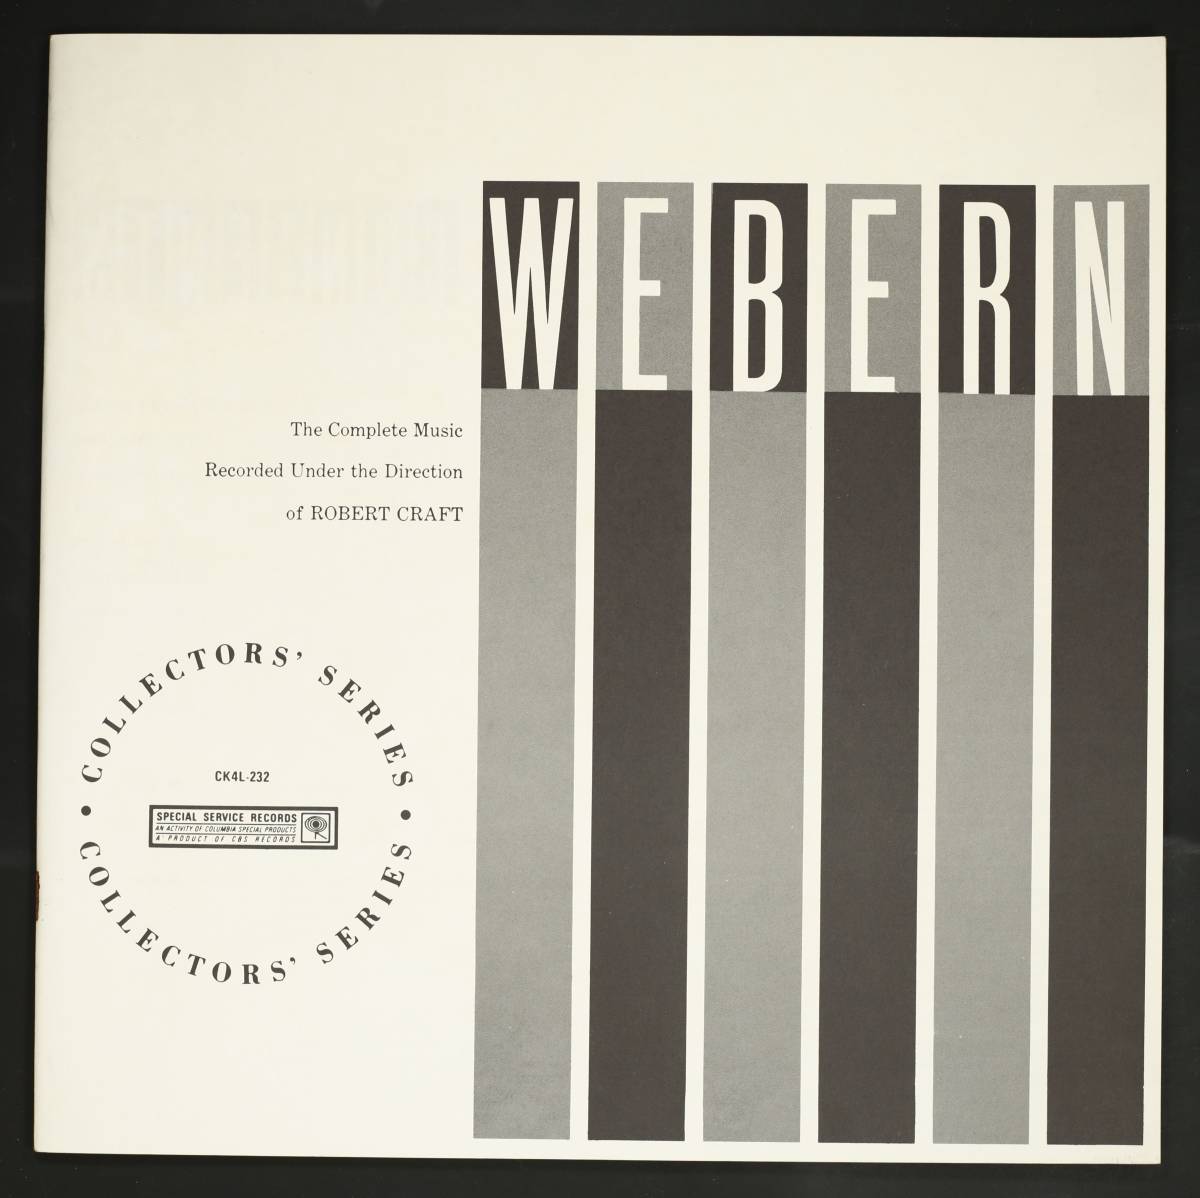 【US盤LP-BOXX】ロバート・クラフト/ウェーベルン全集(並良品,CSP,Webern,Robert Craft)の画像3